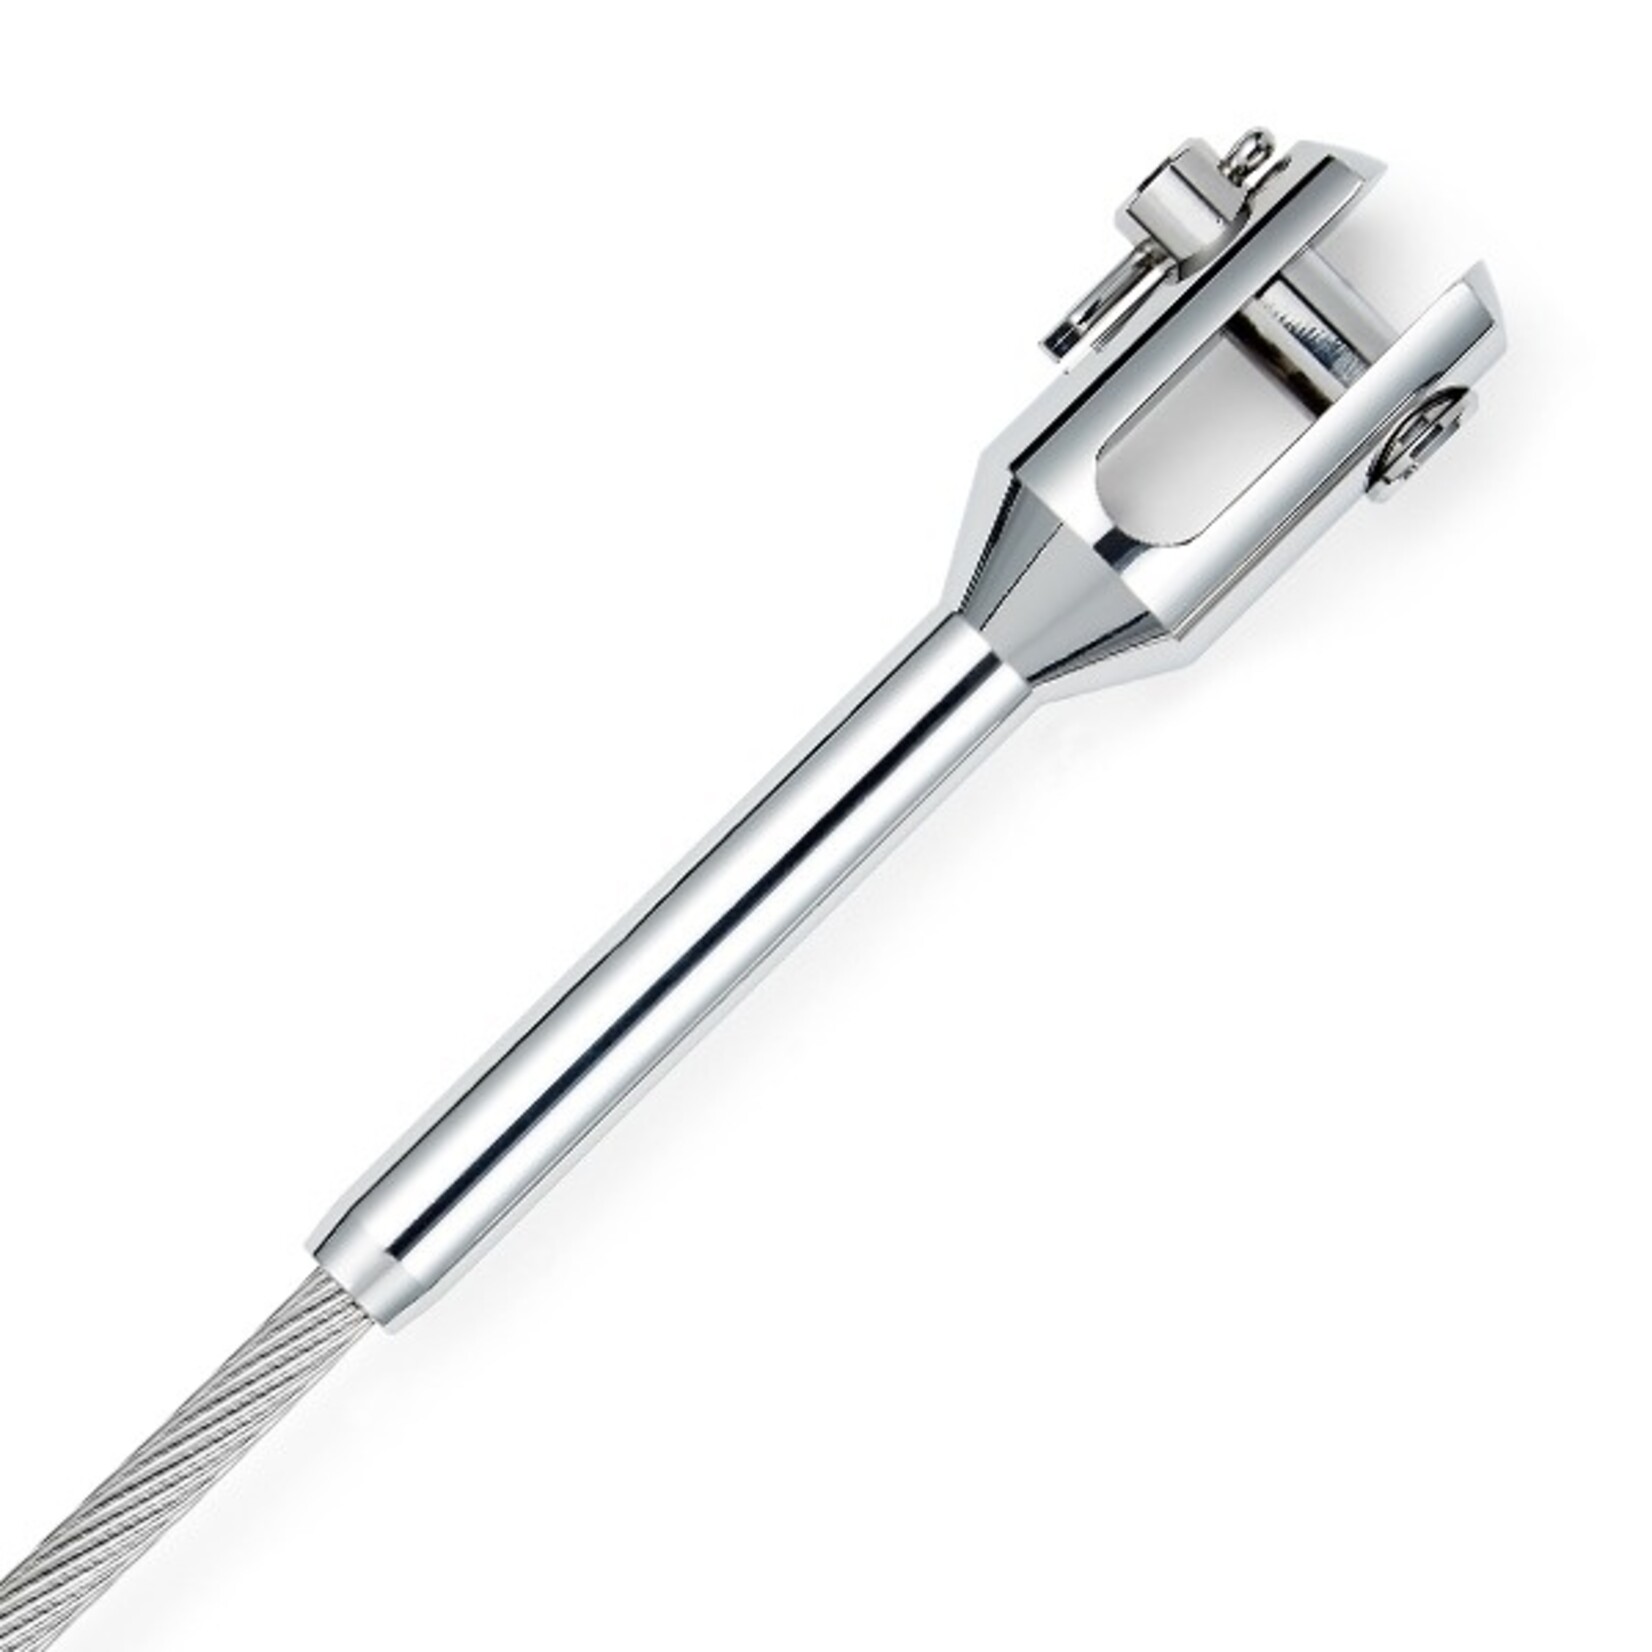 STA-LOK Swage fork  6mm. machined